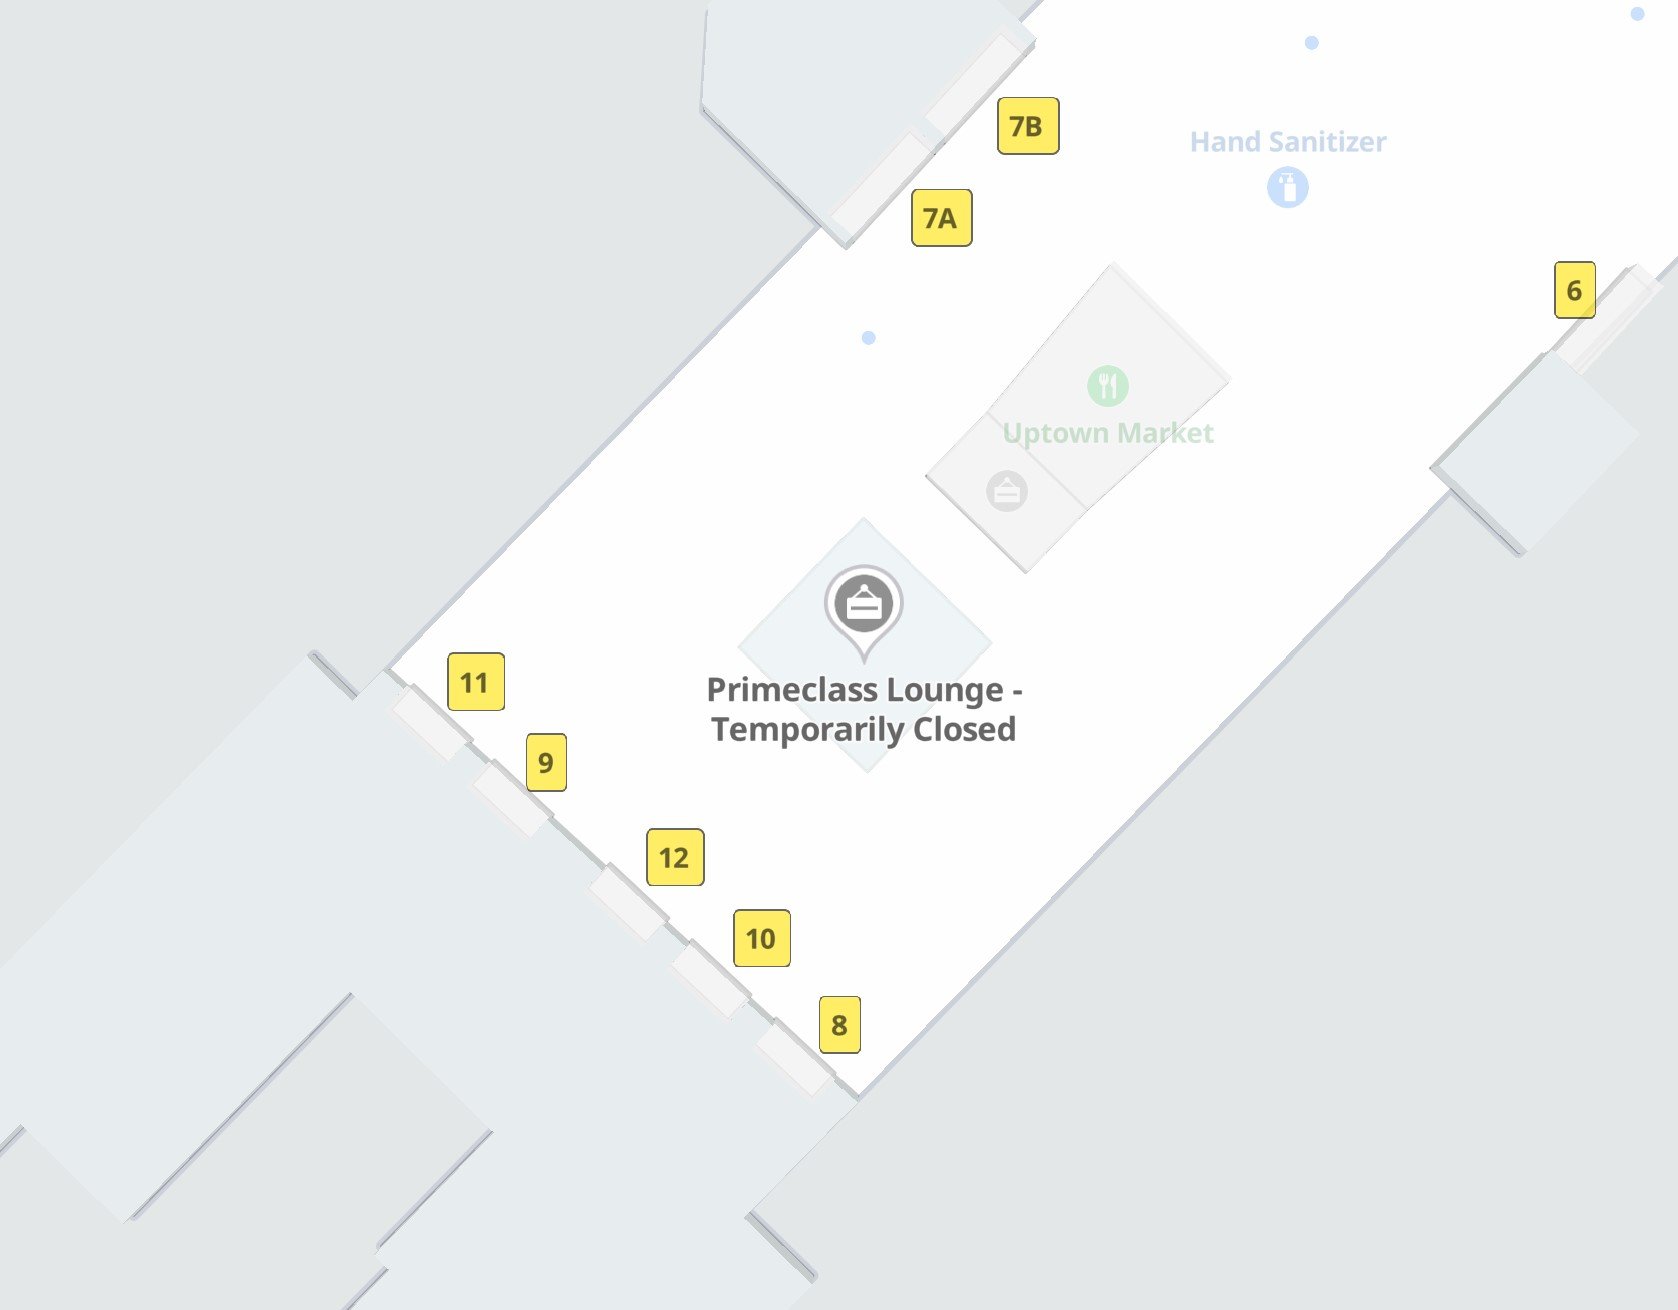 JFK Terminal 1 Map showing location of Primeclass Lounge